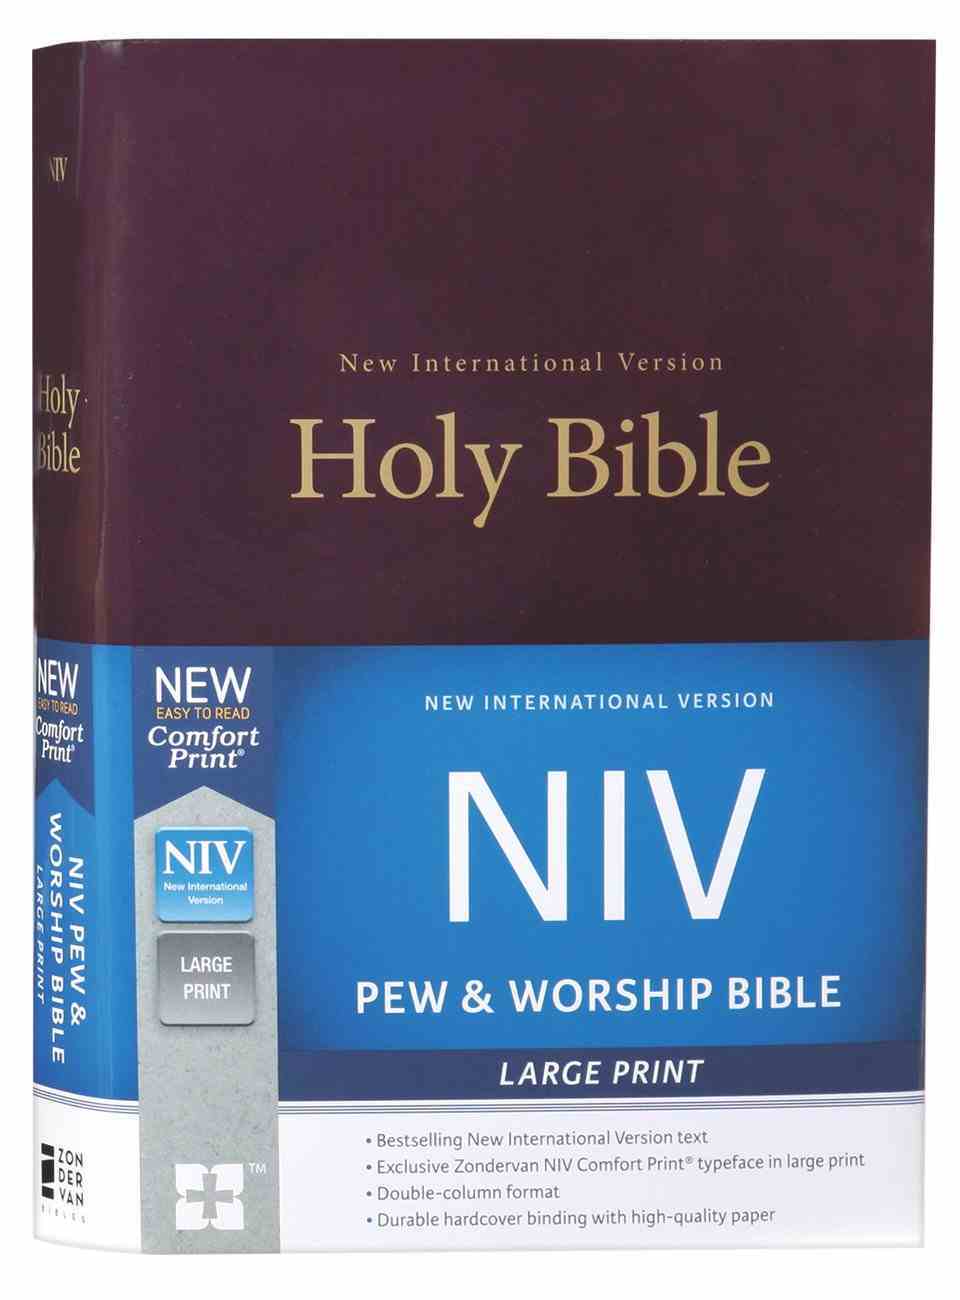 NIV Pew and Worship Bible Large Print Burgundy (Black Letter Edition) Hardback